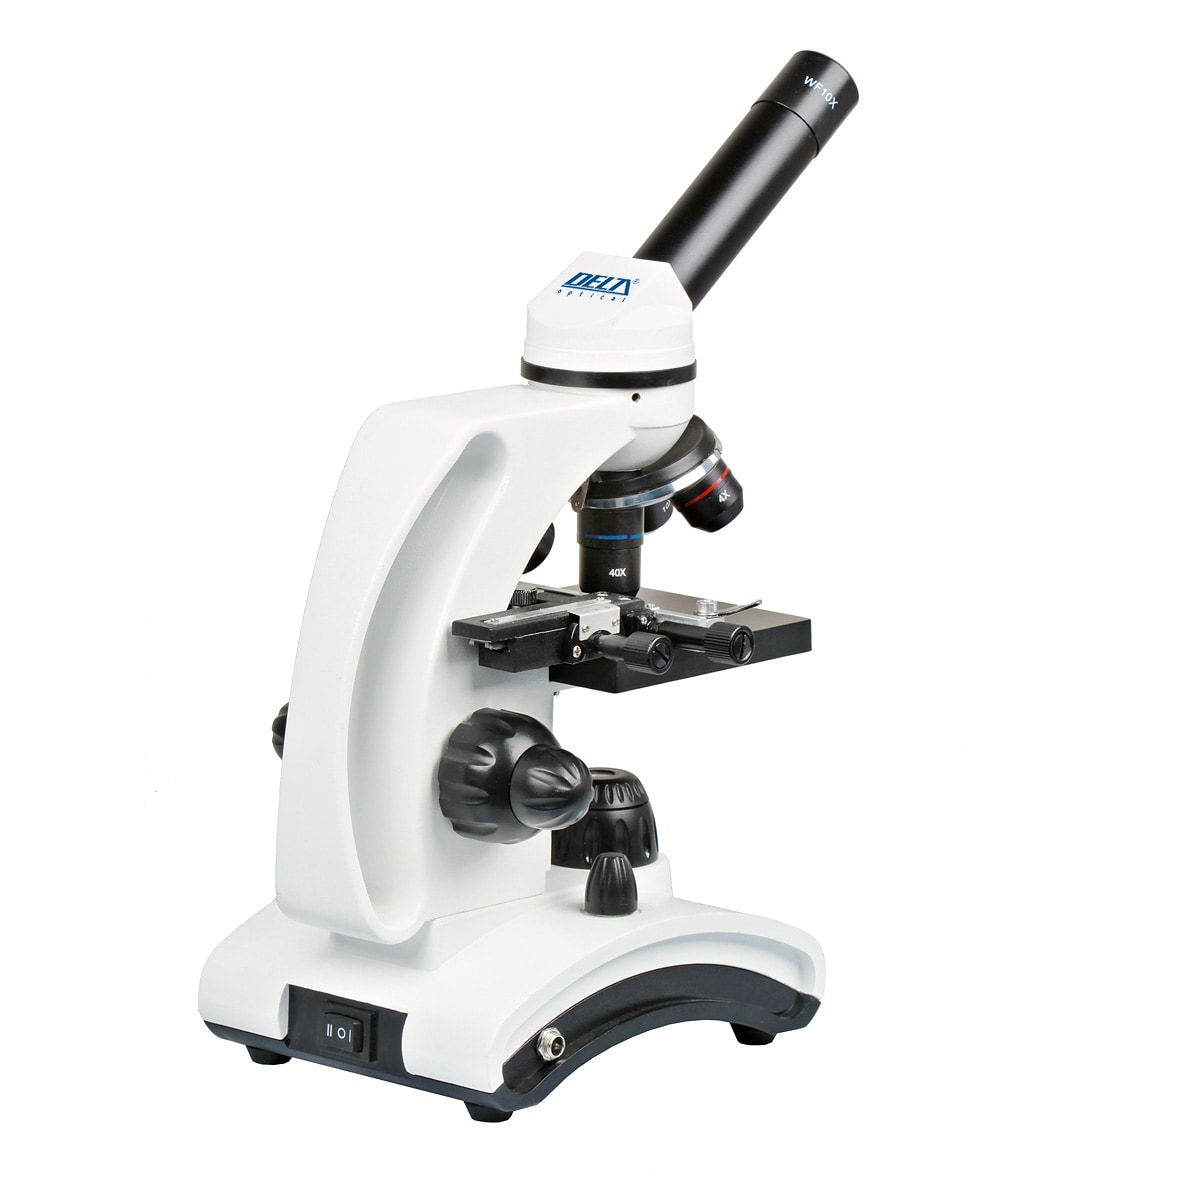 Mikroskop Delta Optical BioLight 300 z kamerą Delta Optical DLT-Cam Basic 2 MP